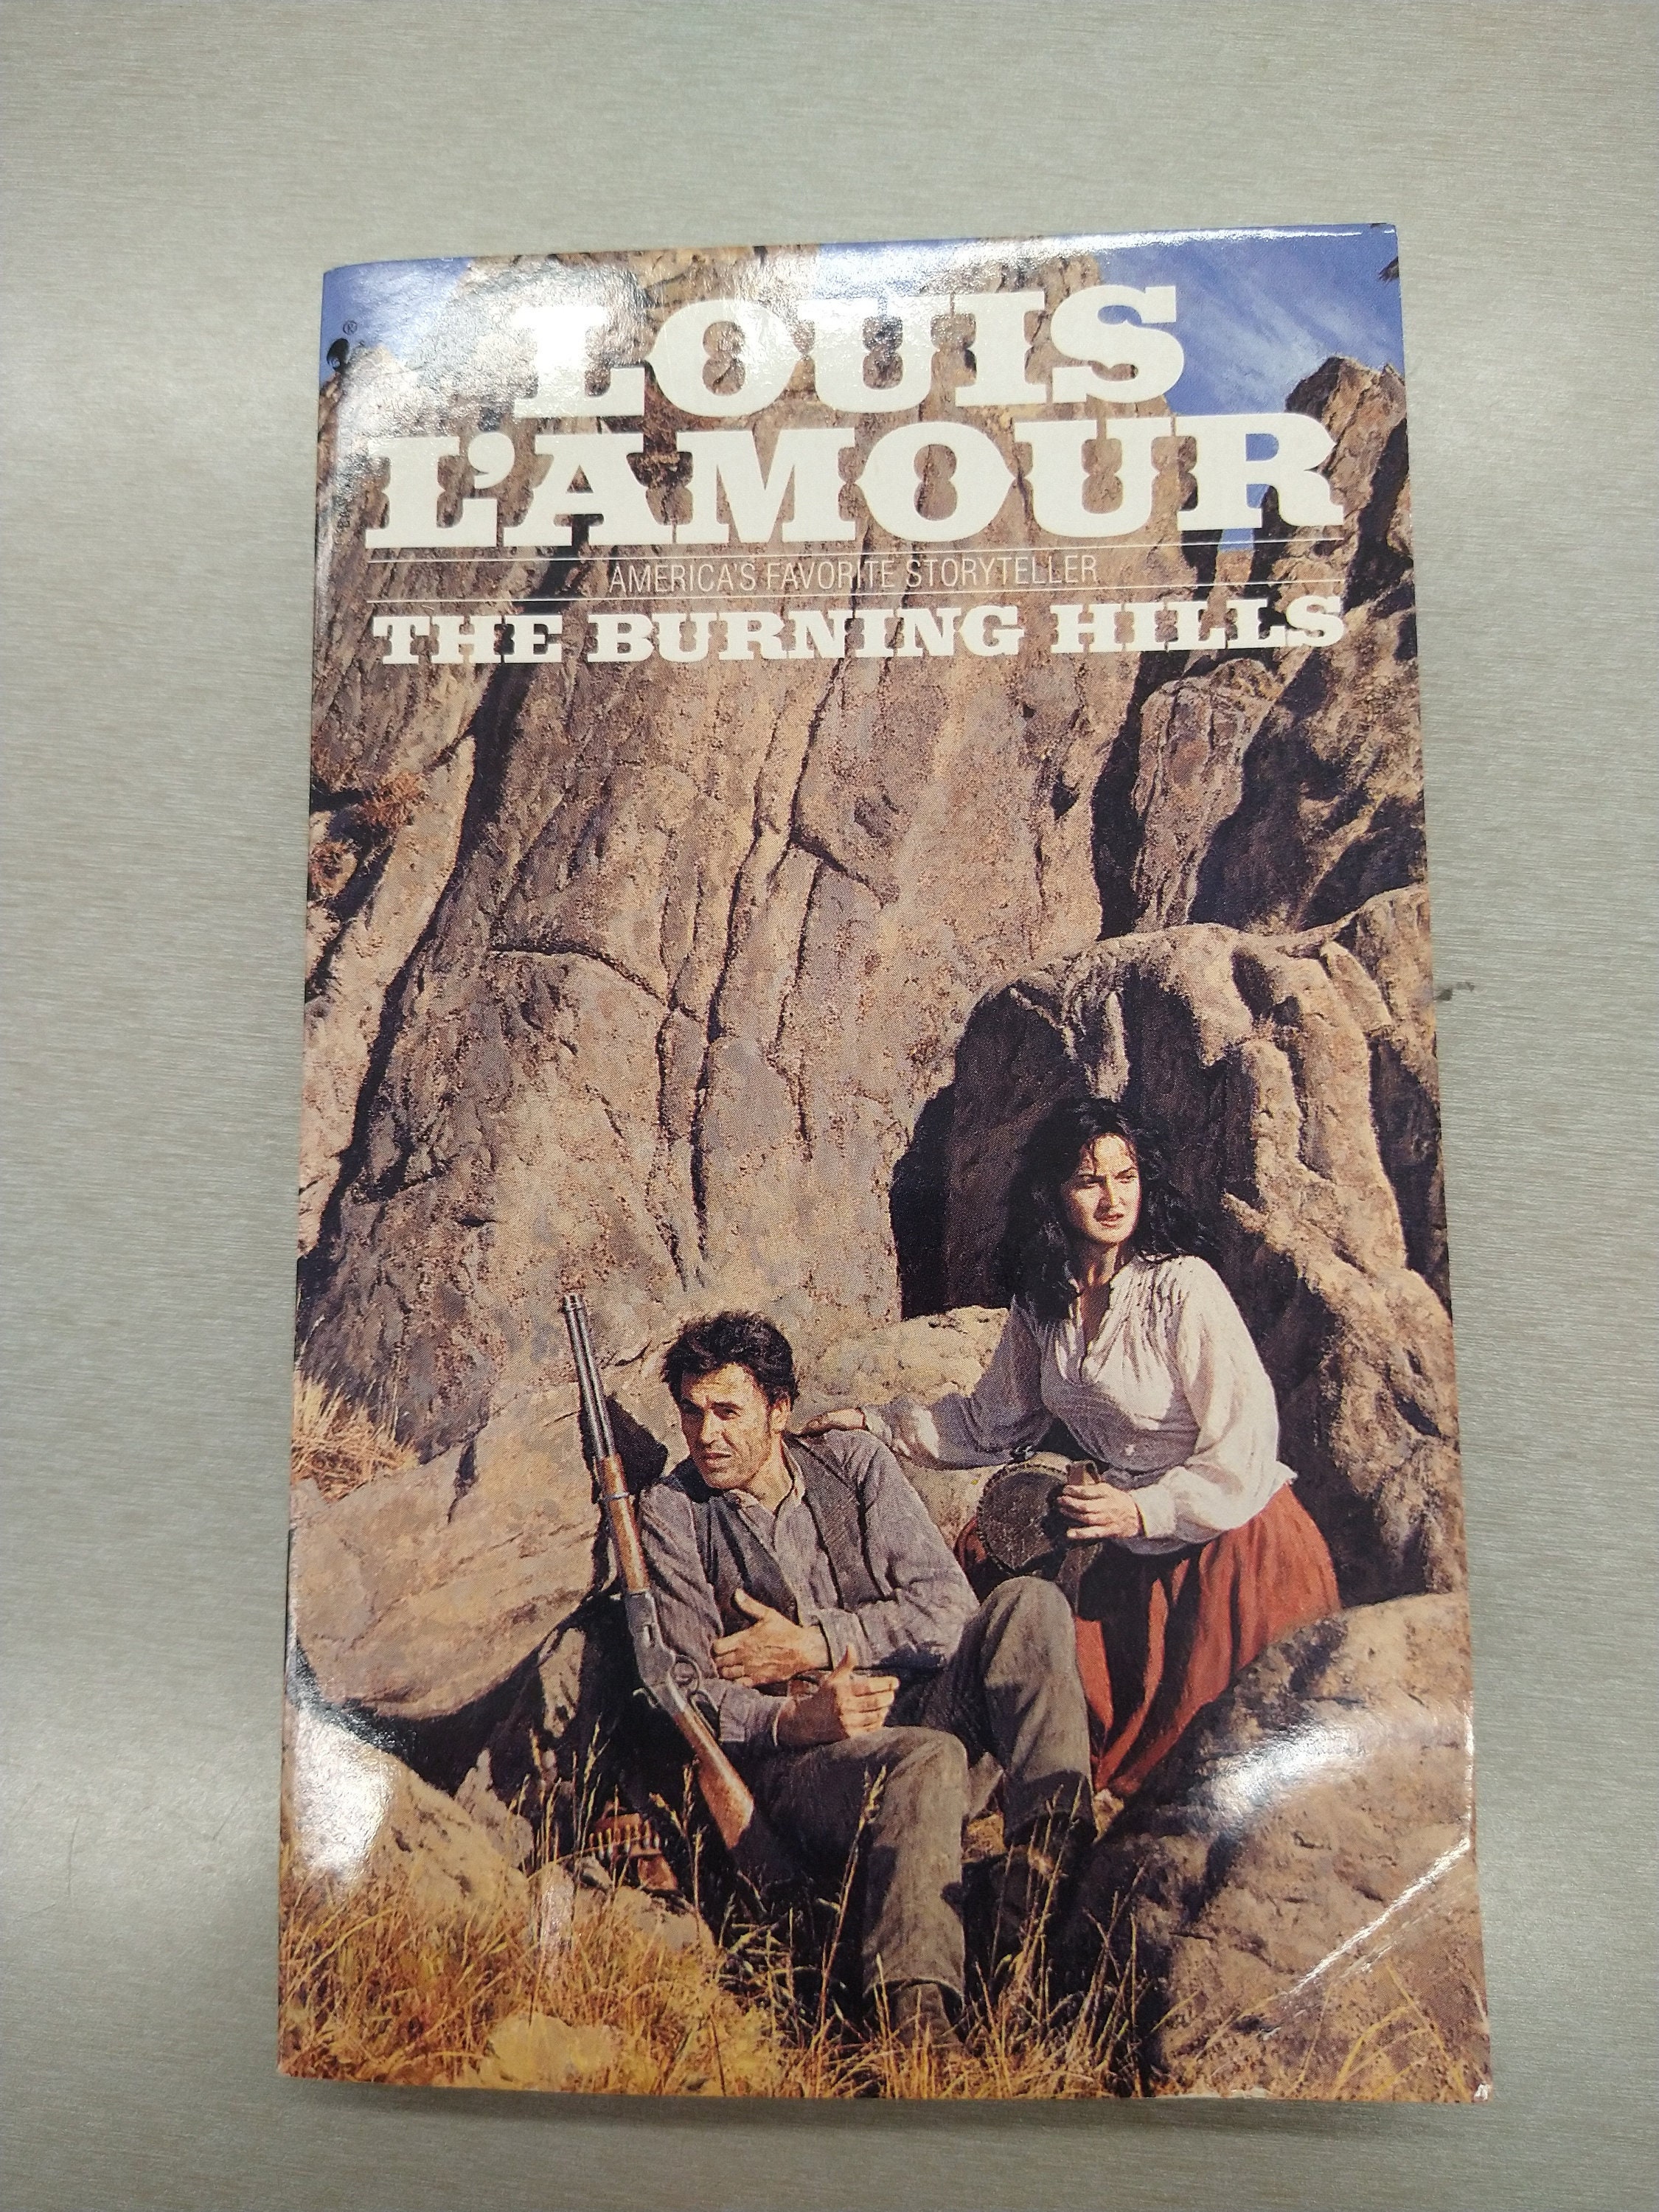 Louis L'amour/set of 5 Paperback Westerns/vintage 